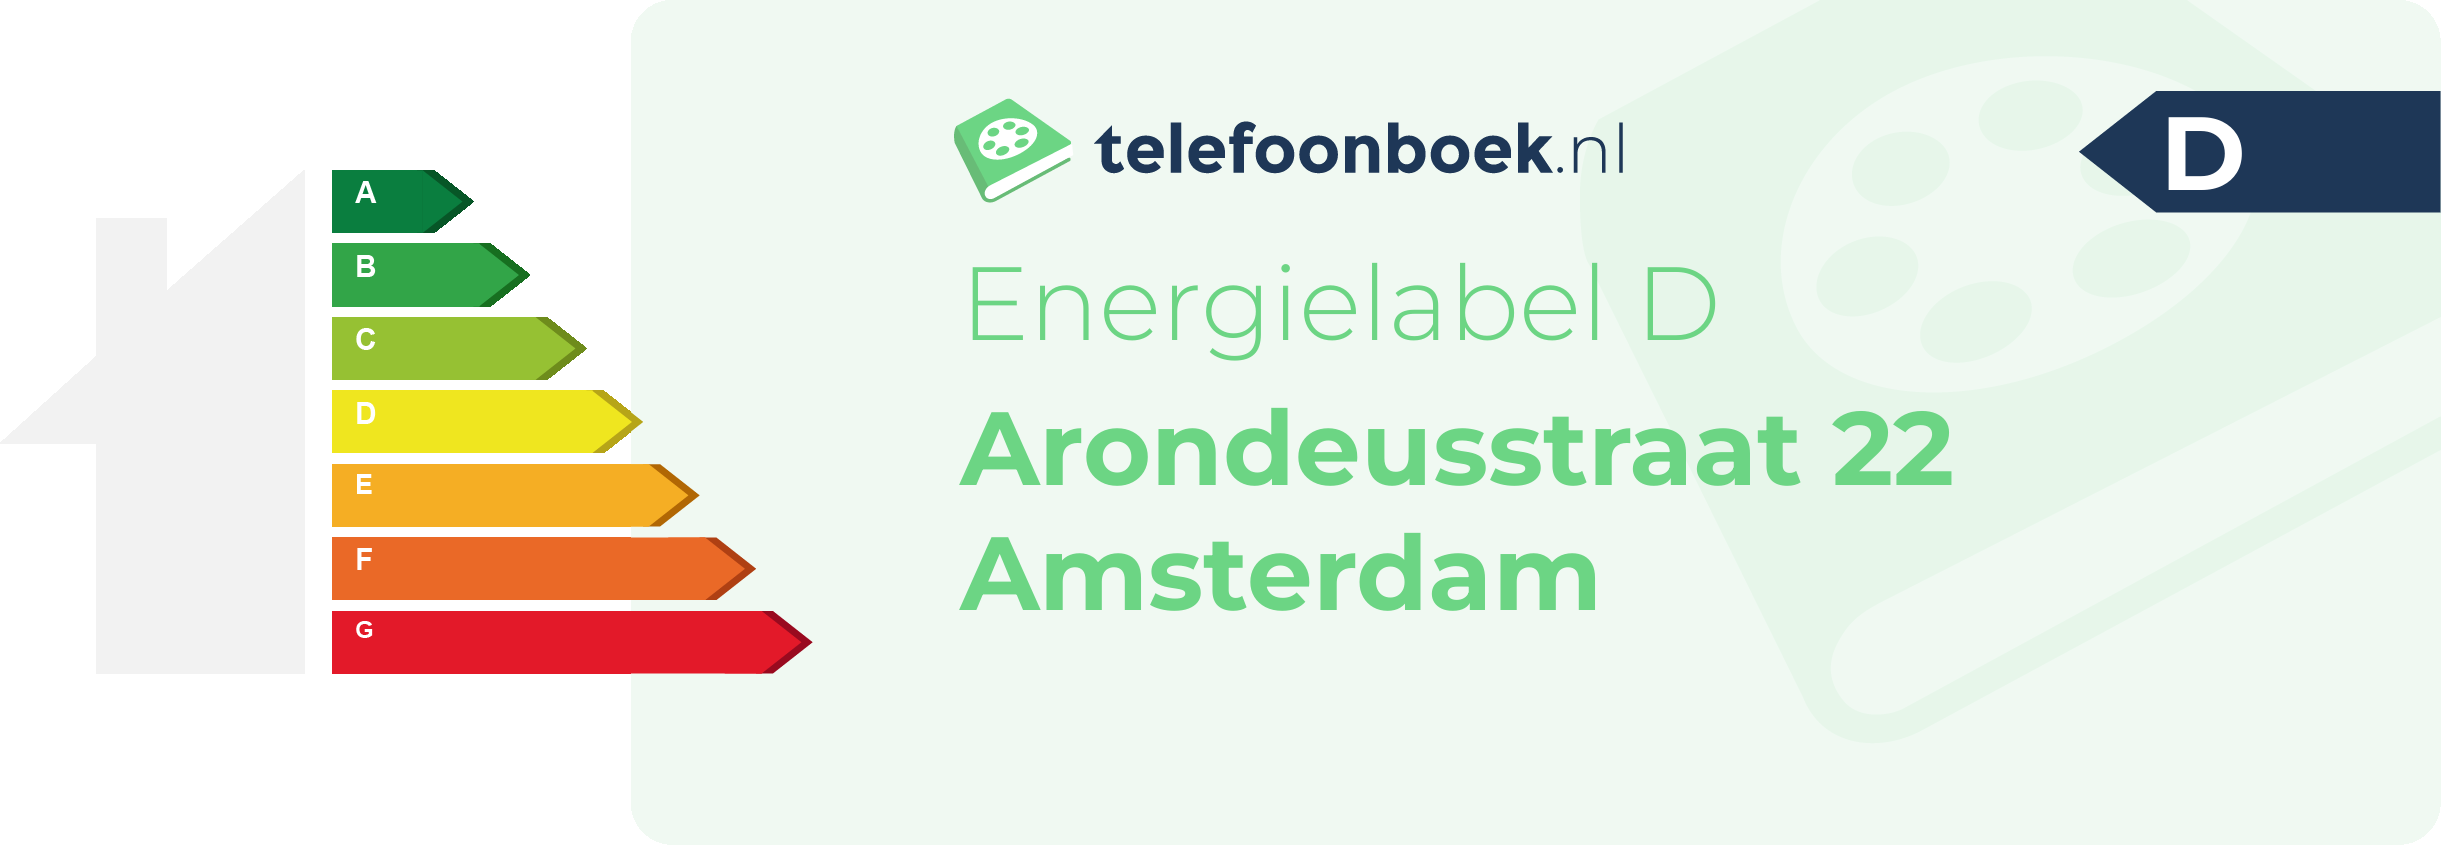 Energielabel Arondeusstraat 22 Amsterdam